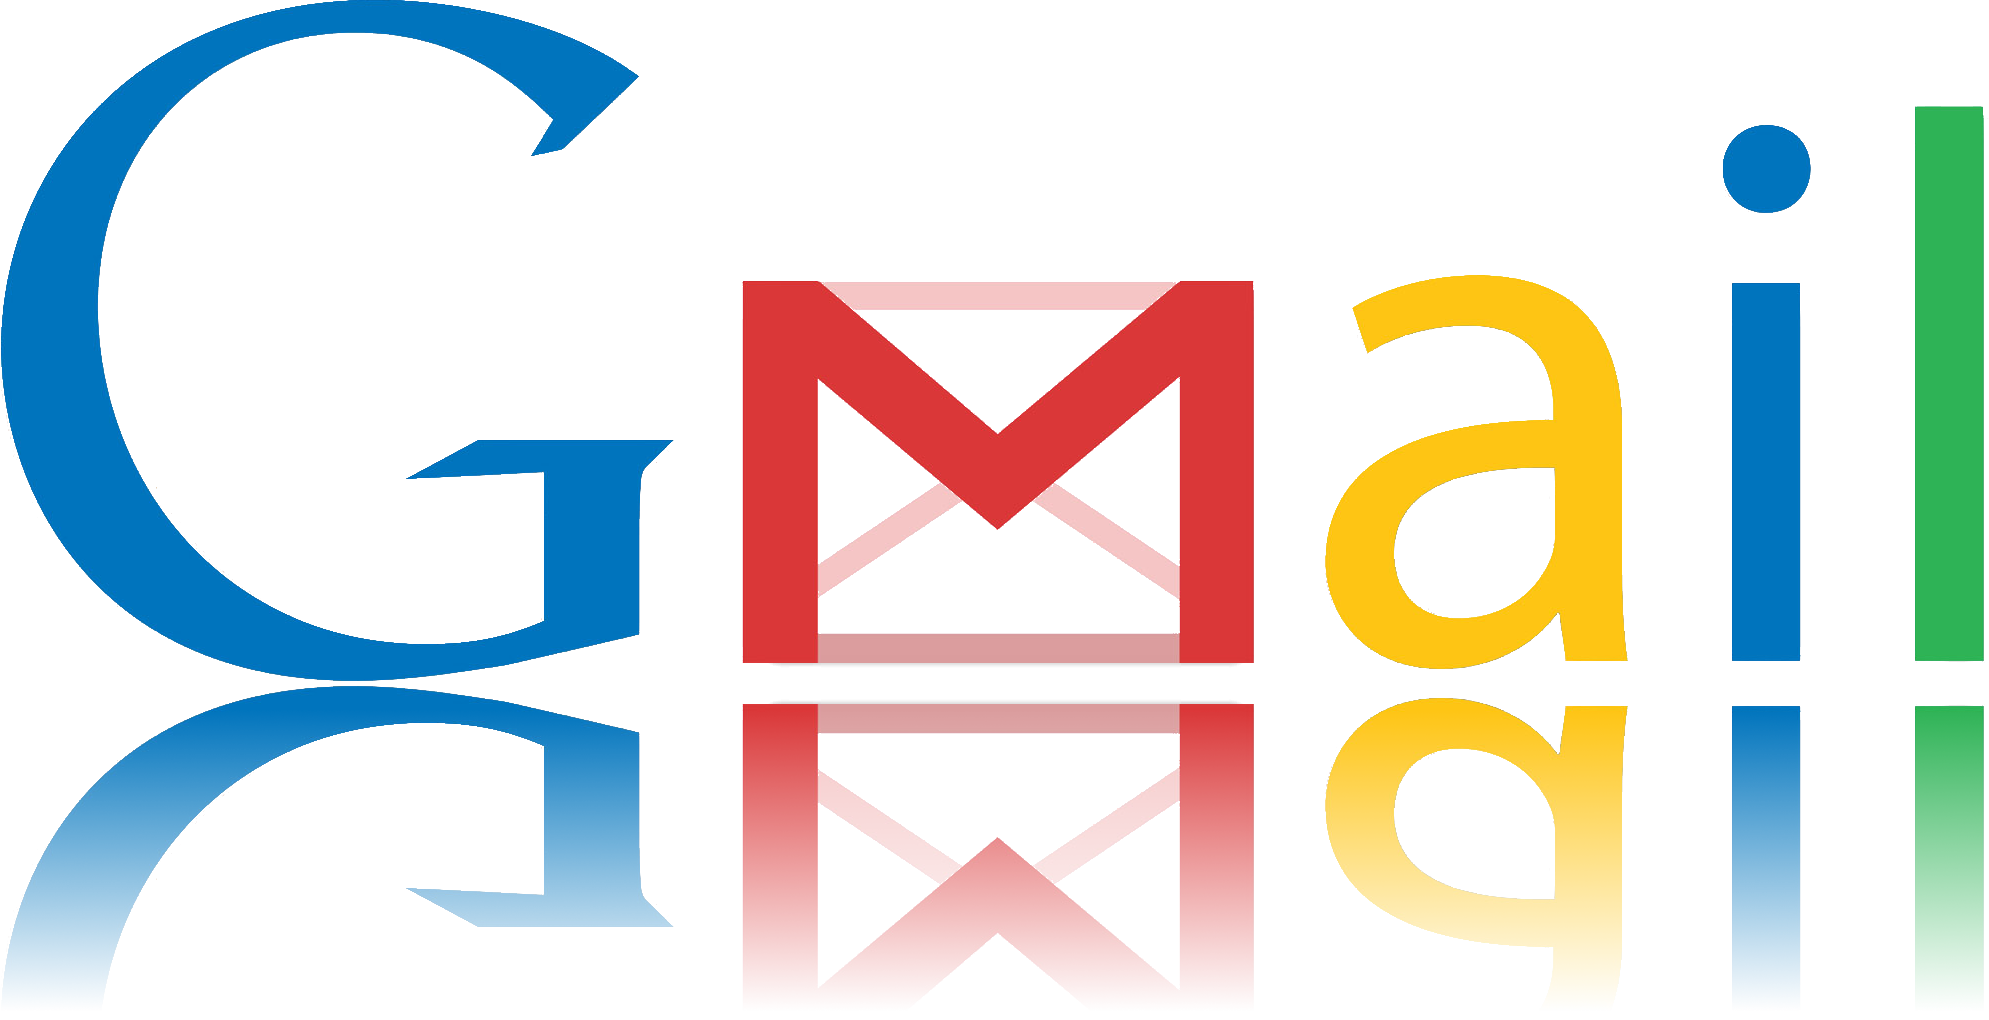 Pro gmail com. Gmail лого. Почта gmail PNG. Gmail логотип PNG.